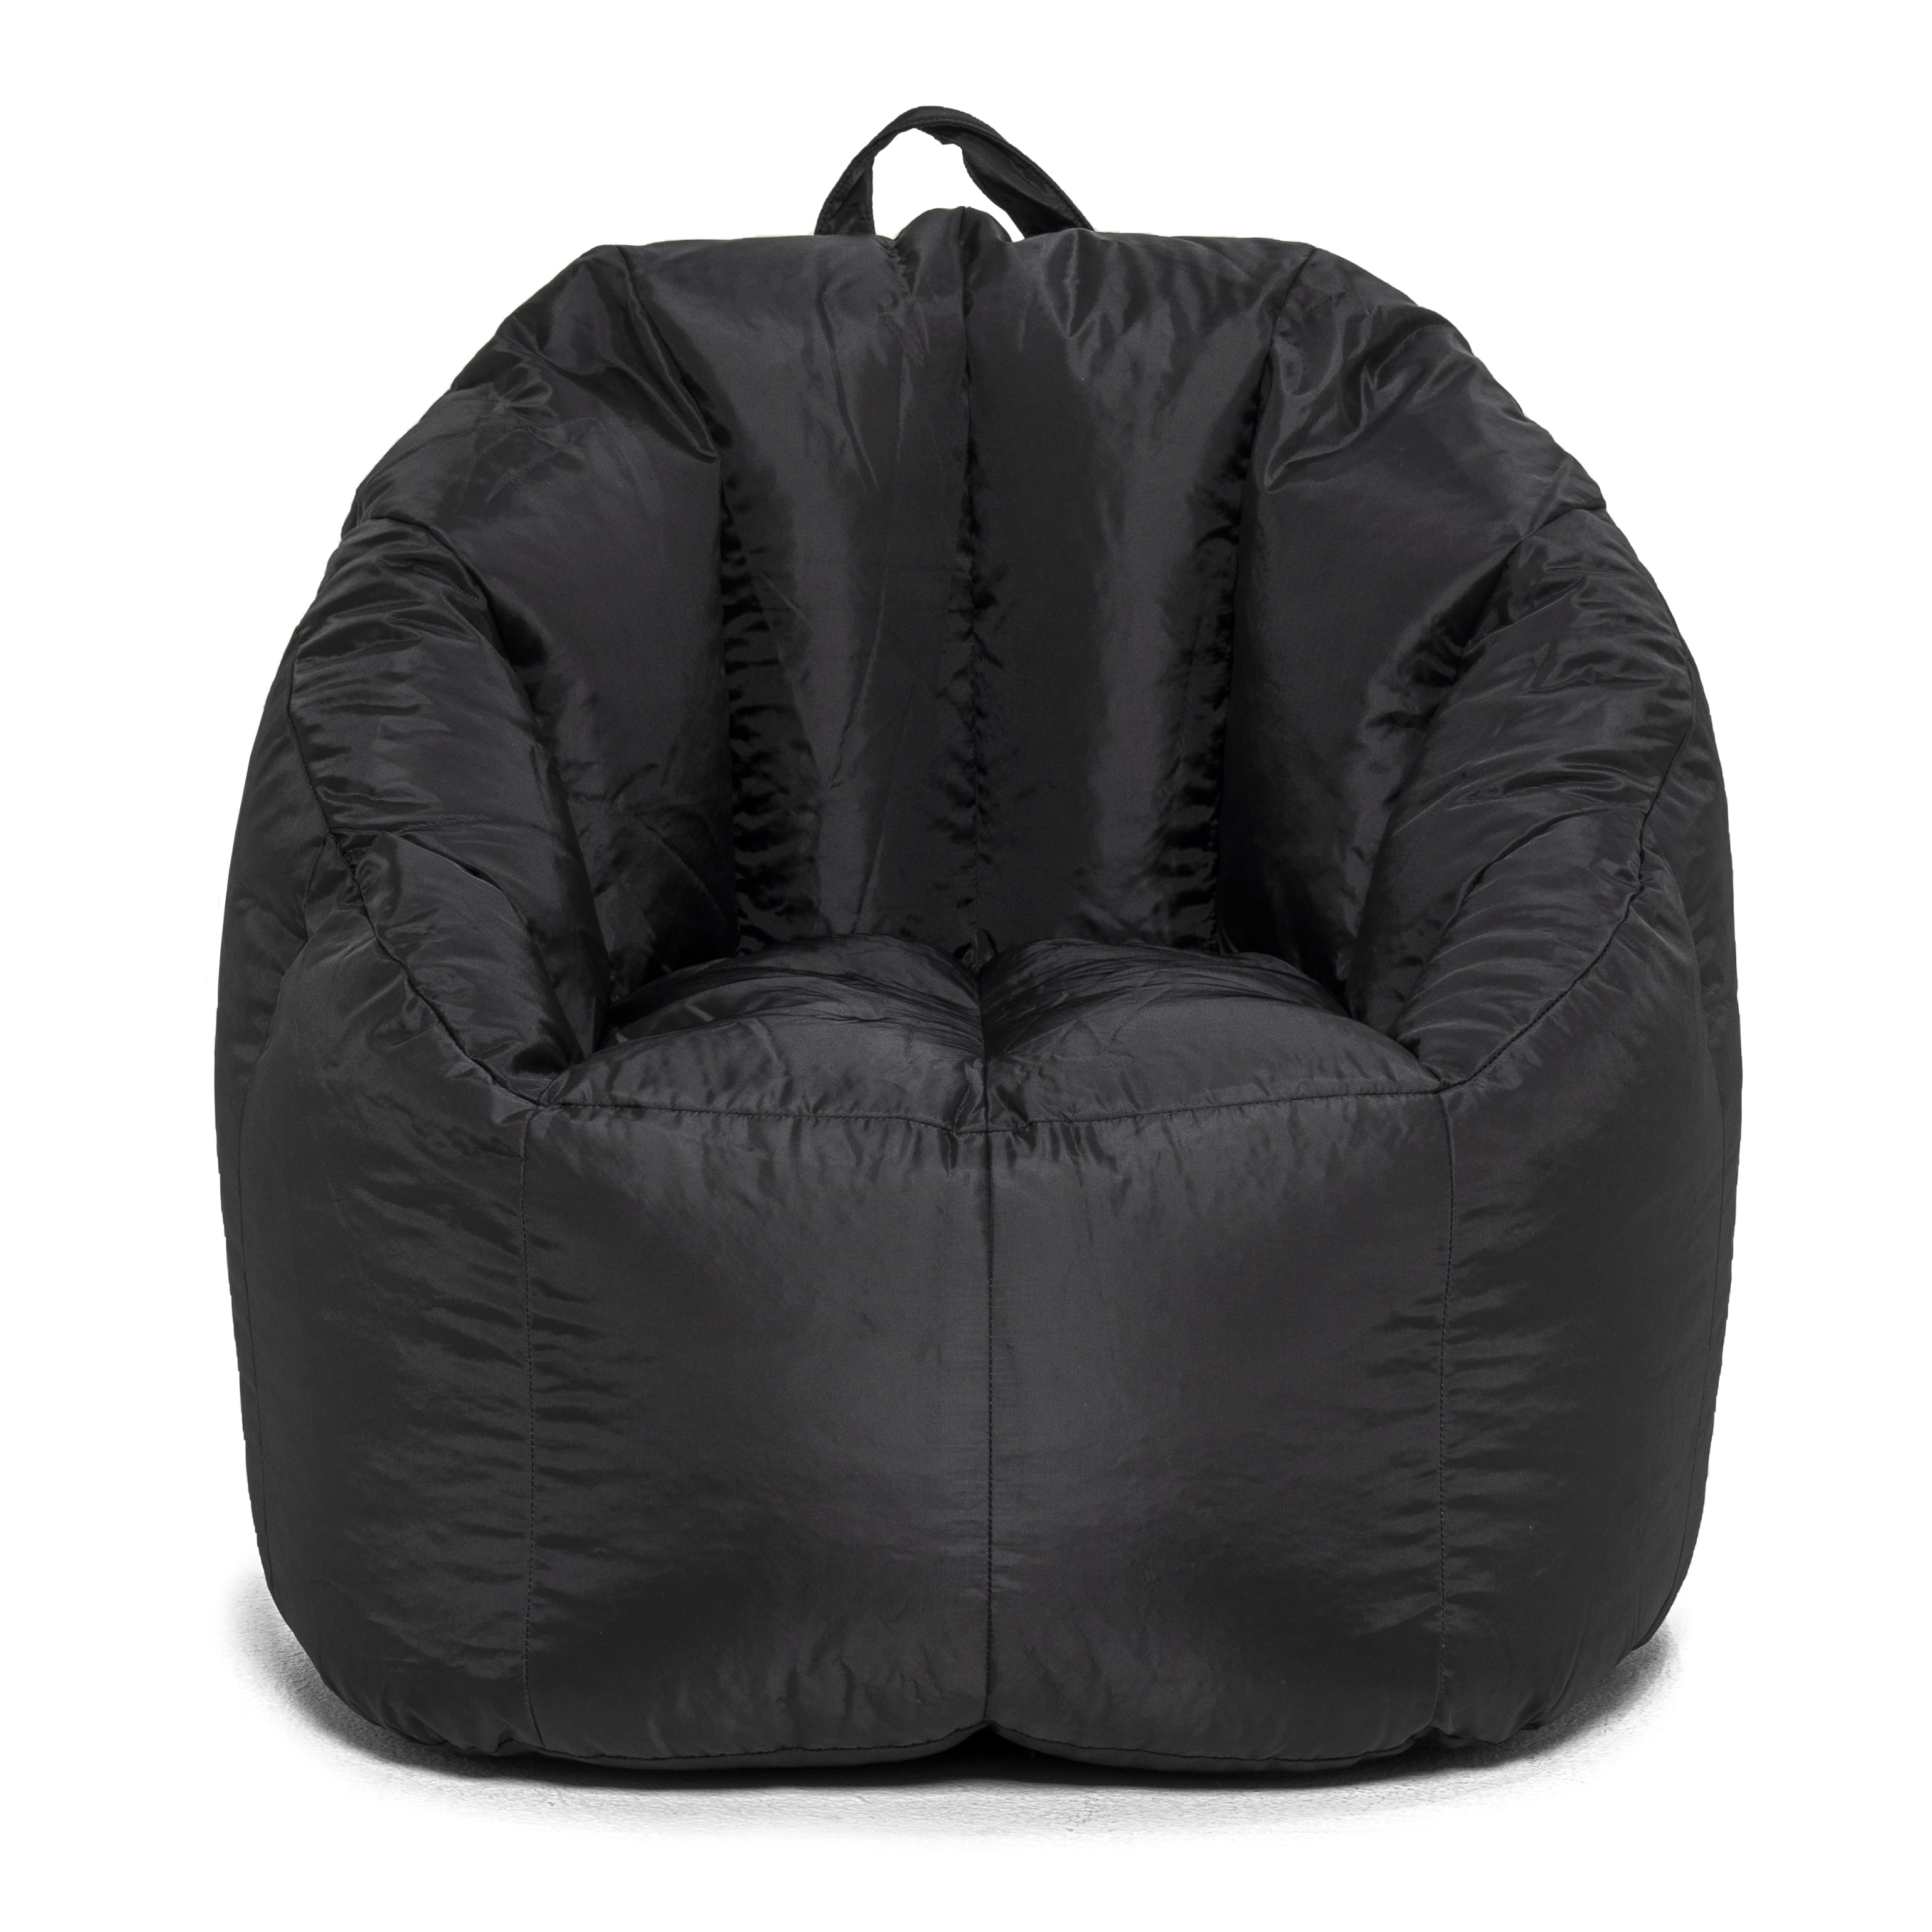 Big Joe Fuf Small Bean Bag Chair, Plush Kids, 2ft, Black - Walmart.com